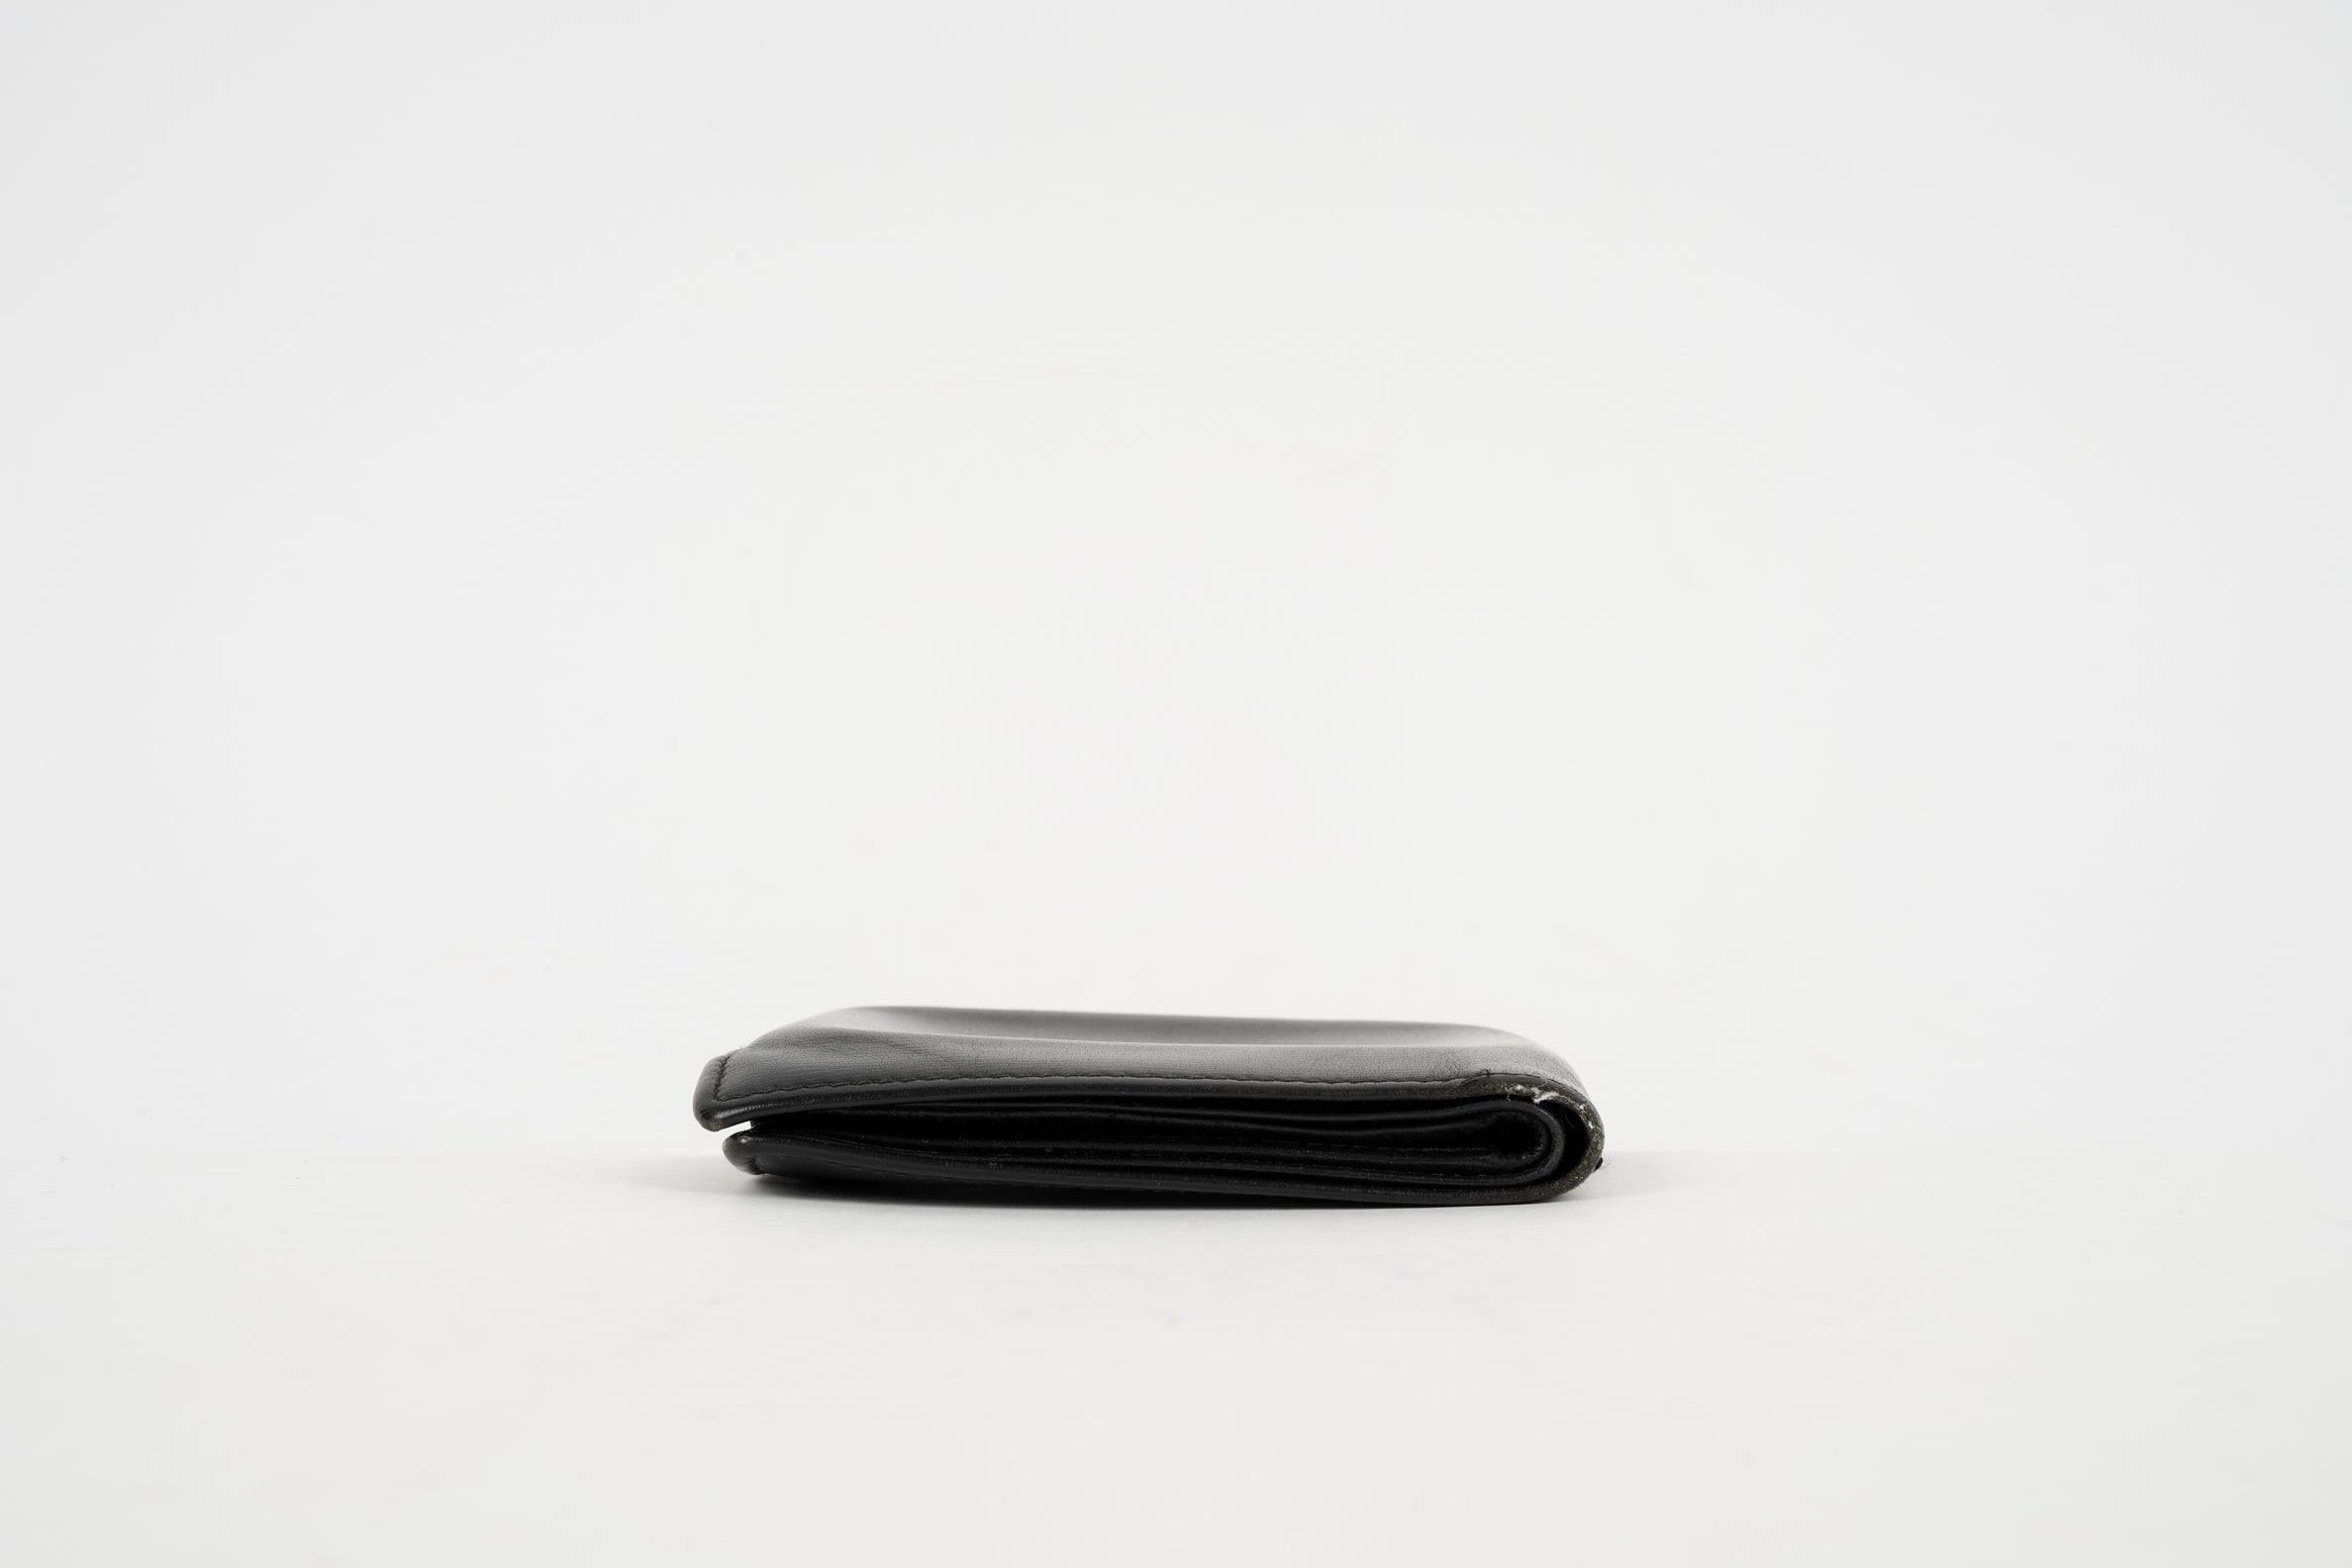 Black Leather wallet - Volver